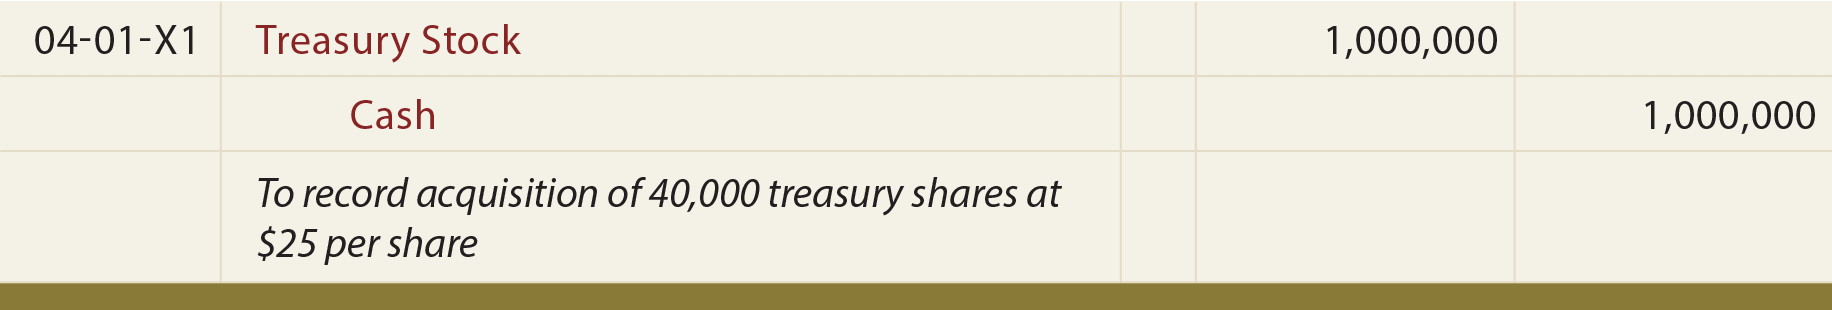 Treasury Stock Journal Entry